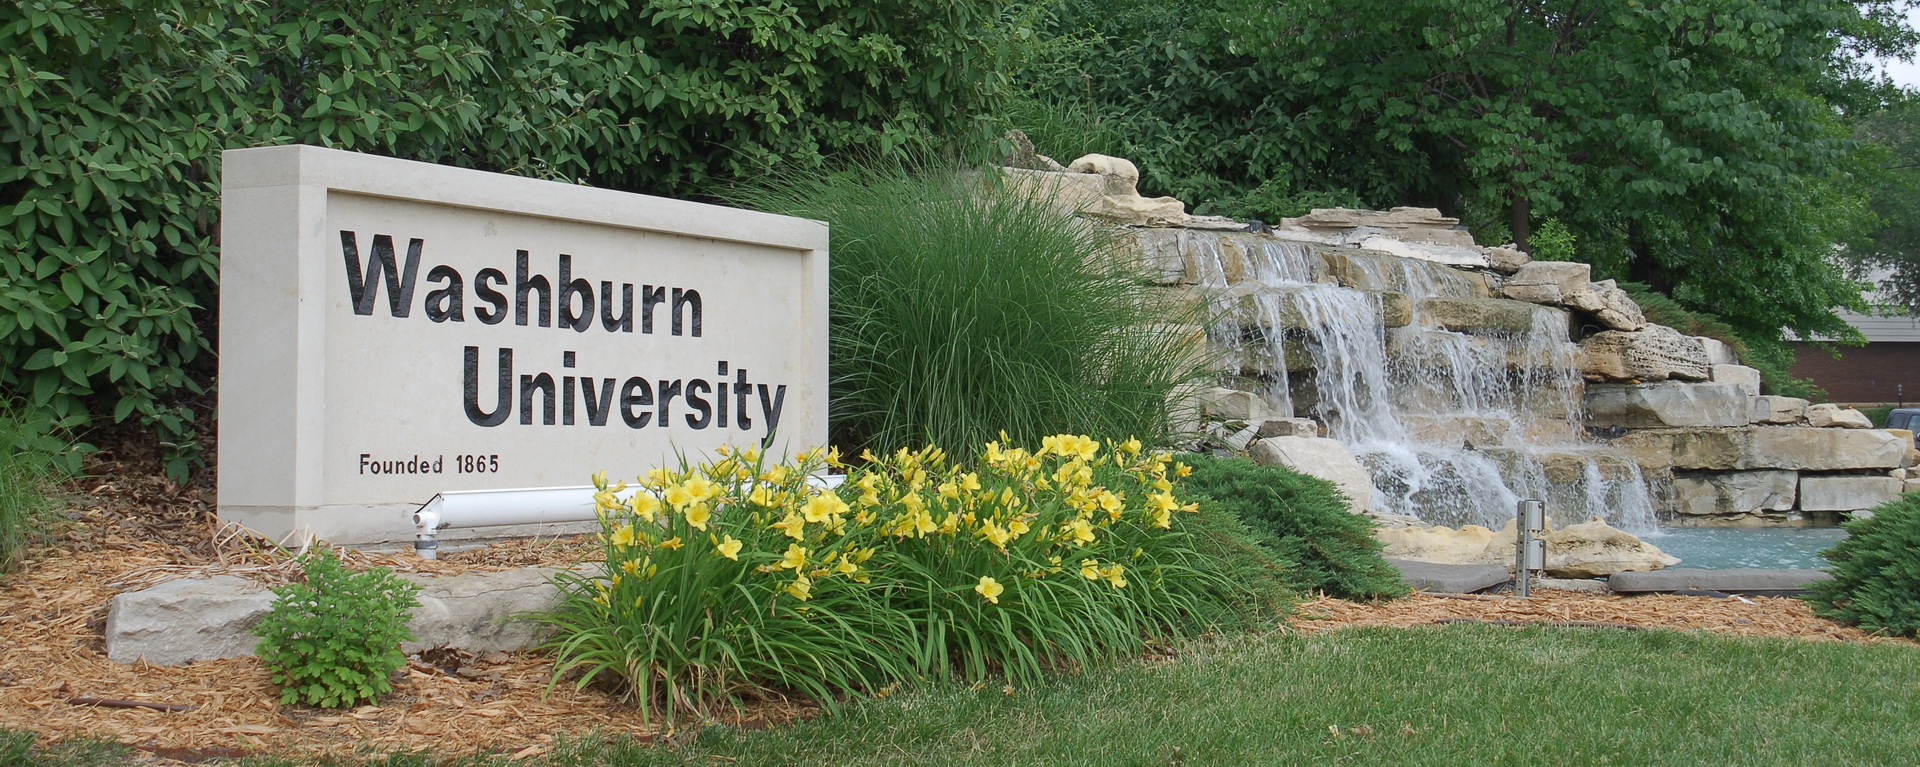 Washburn University sign with waterfall